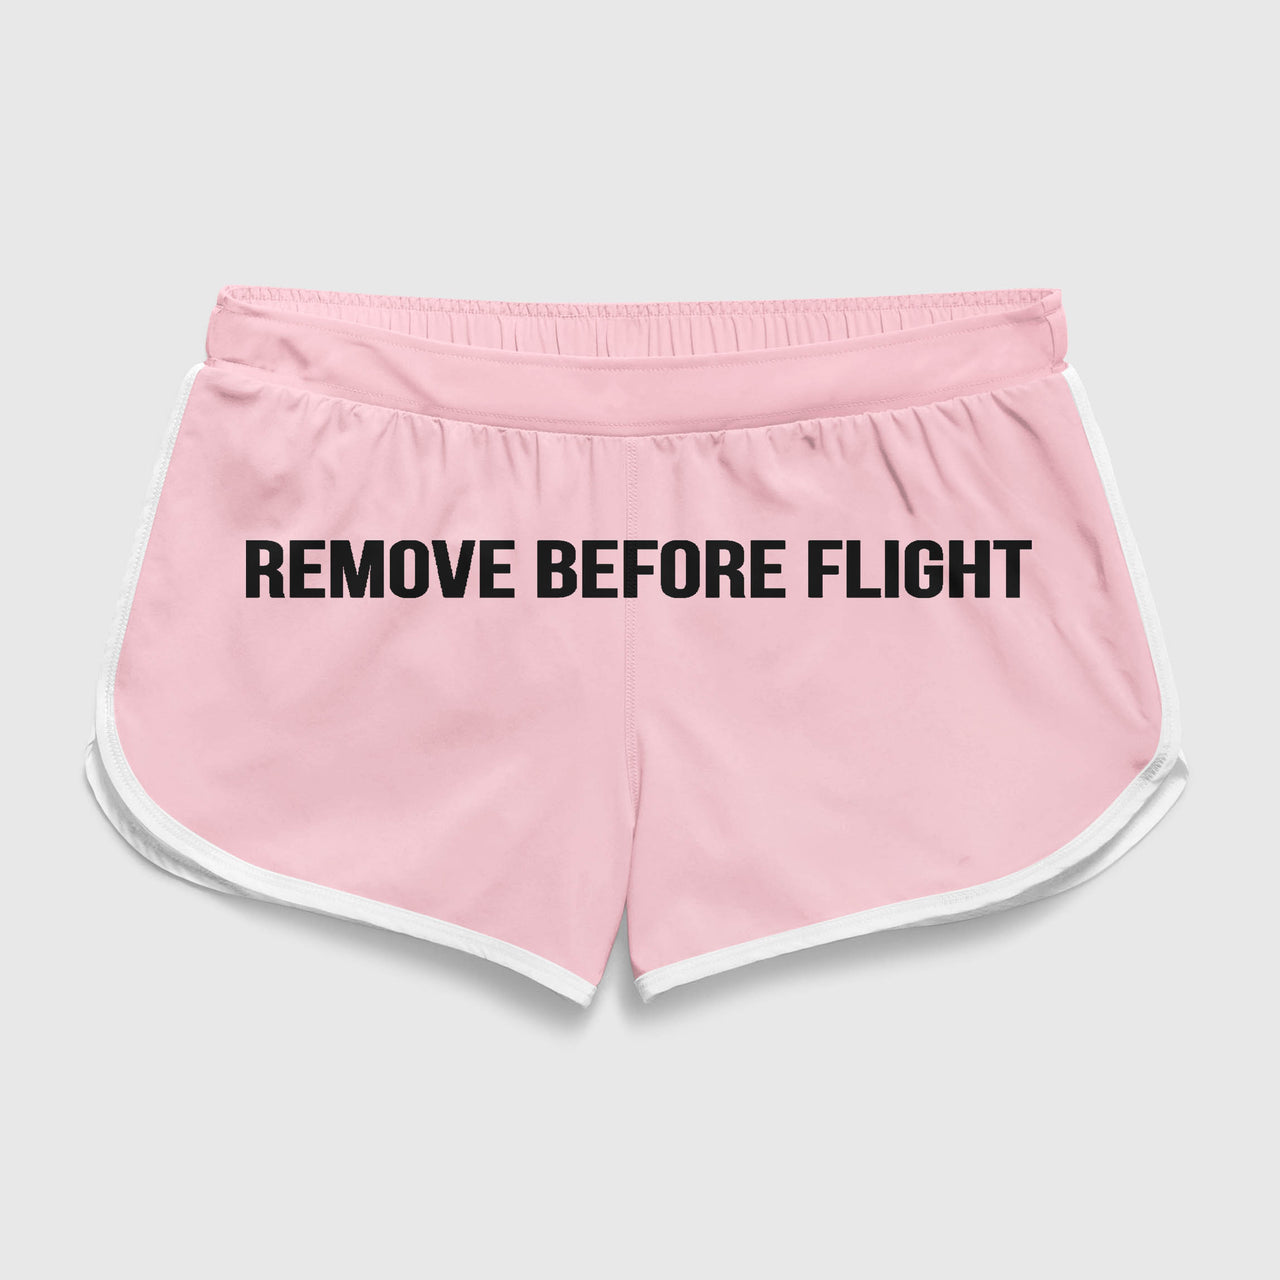 Remove Before Flight (2) Designed Women Beach Style Shorts